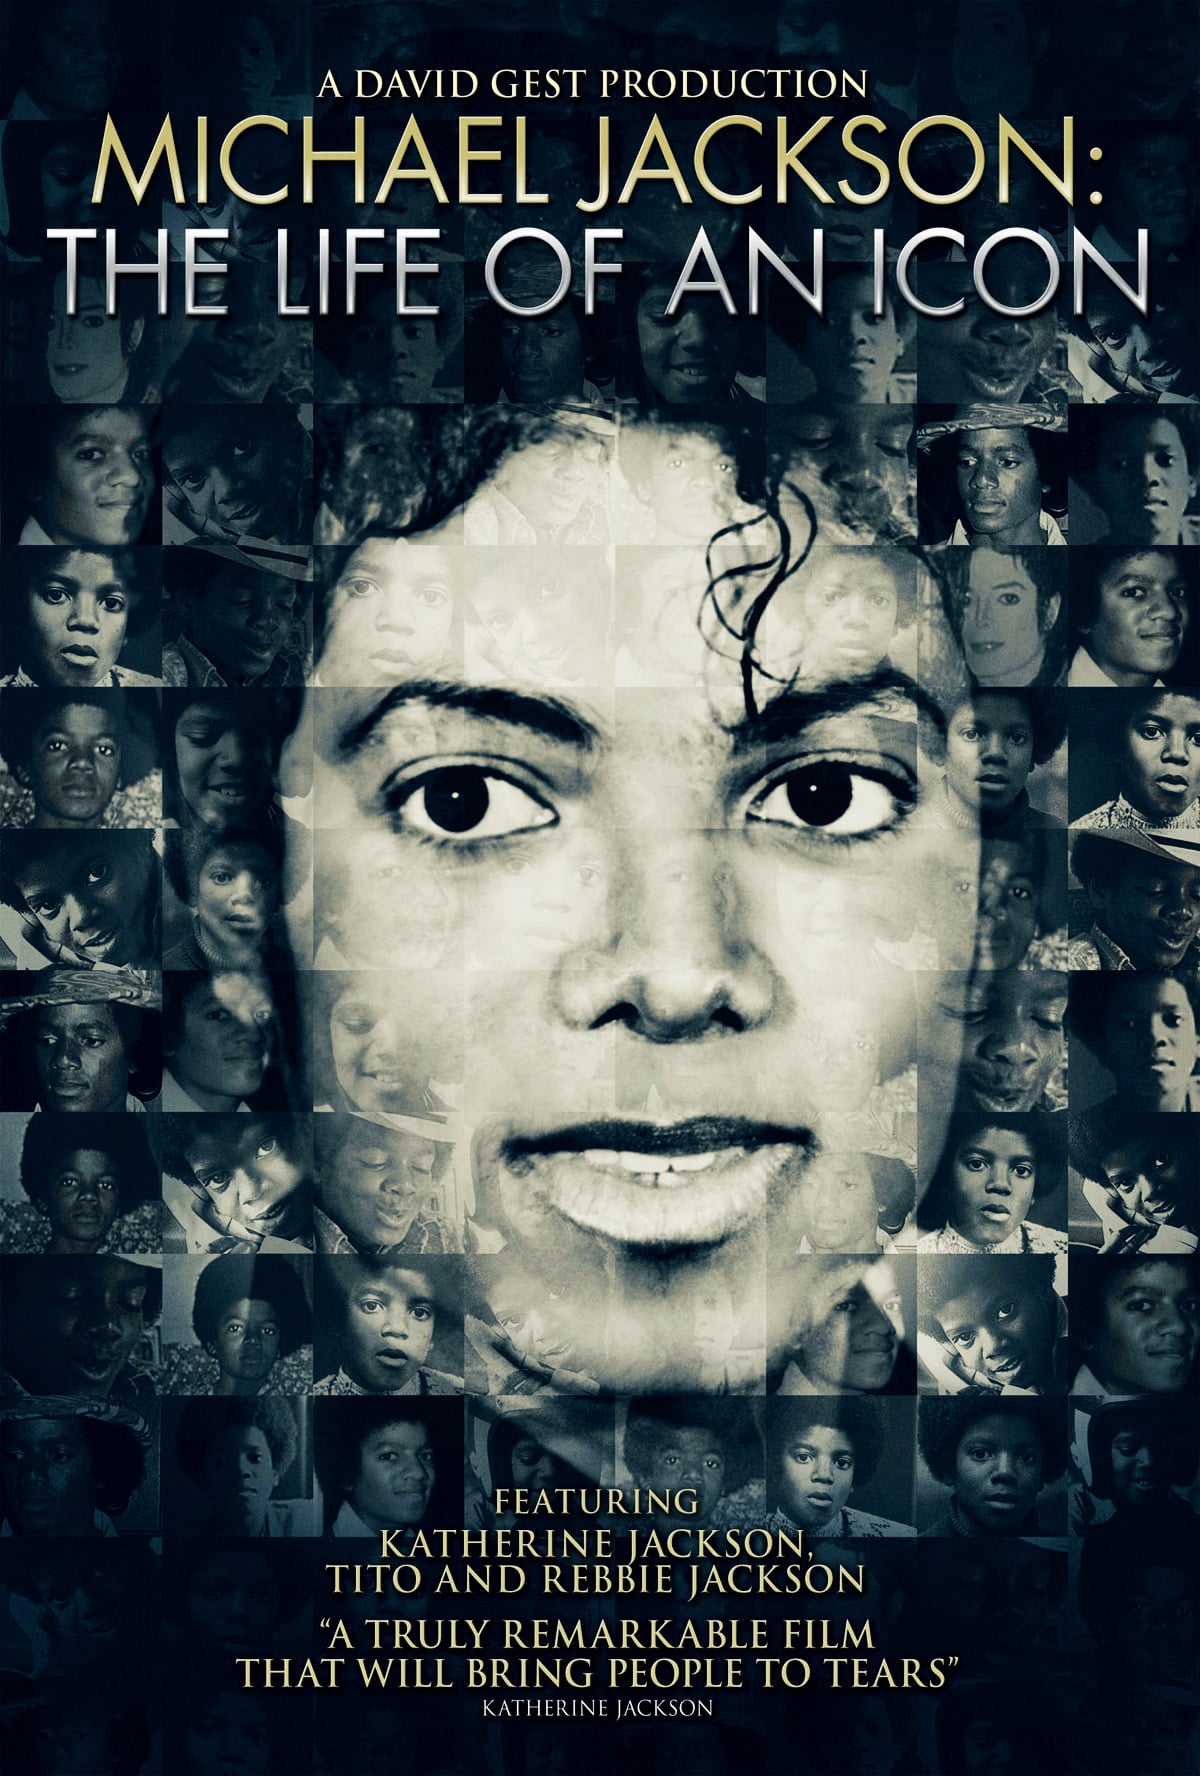 Plakat von "Michael Jackson - The Life of an Icon"